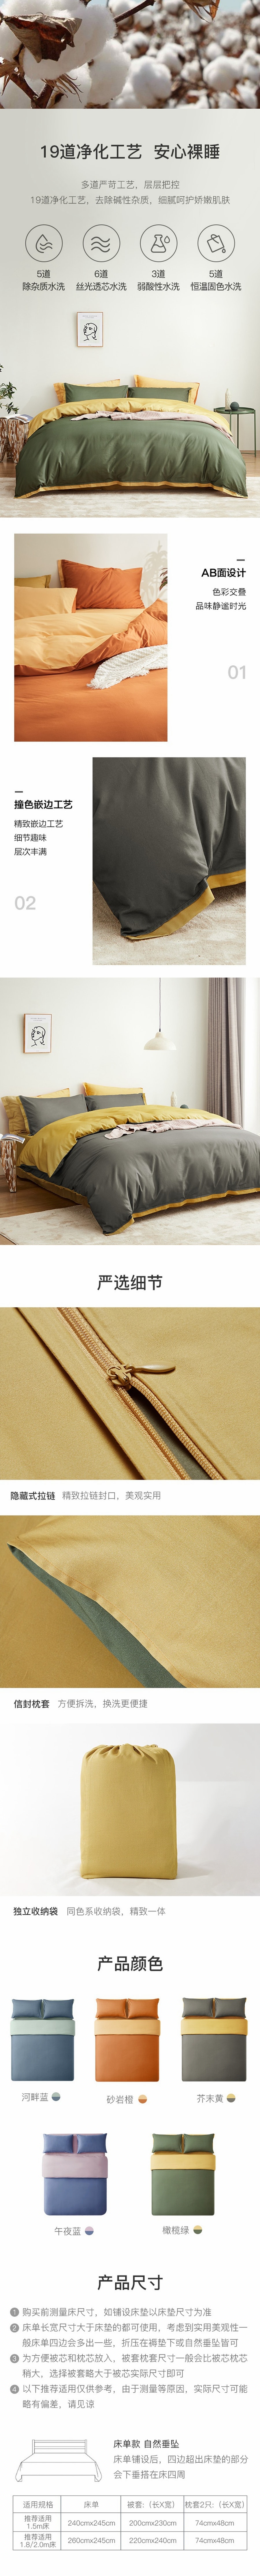 LIFEASE Long-Staple Cotton Sanding 4-Piece Bedding Set with Duvet Cover